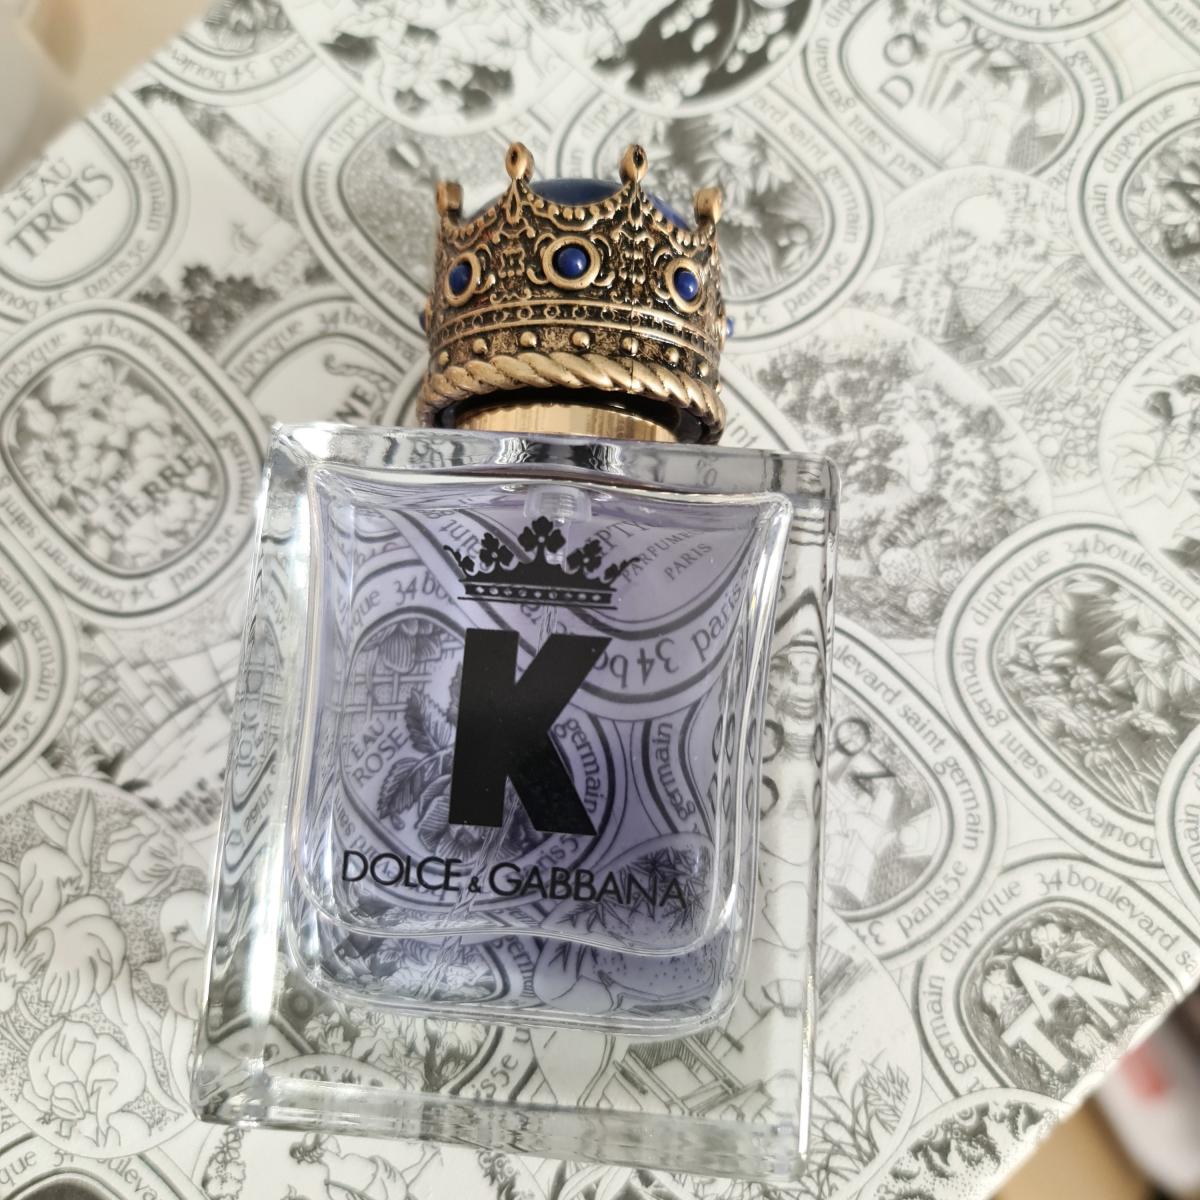 K by Dolce & Gabbana Dolce&Gabbana cologne - a fragrance for men 2019